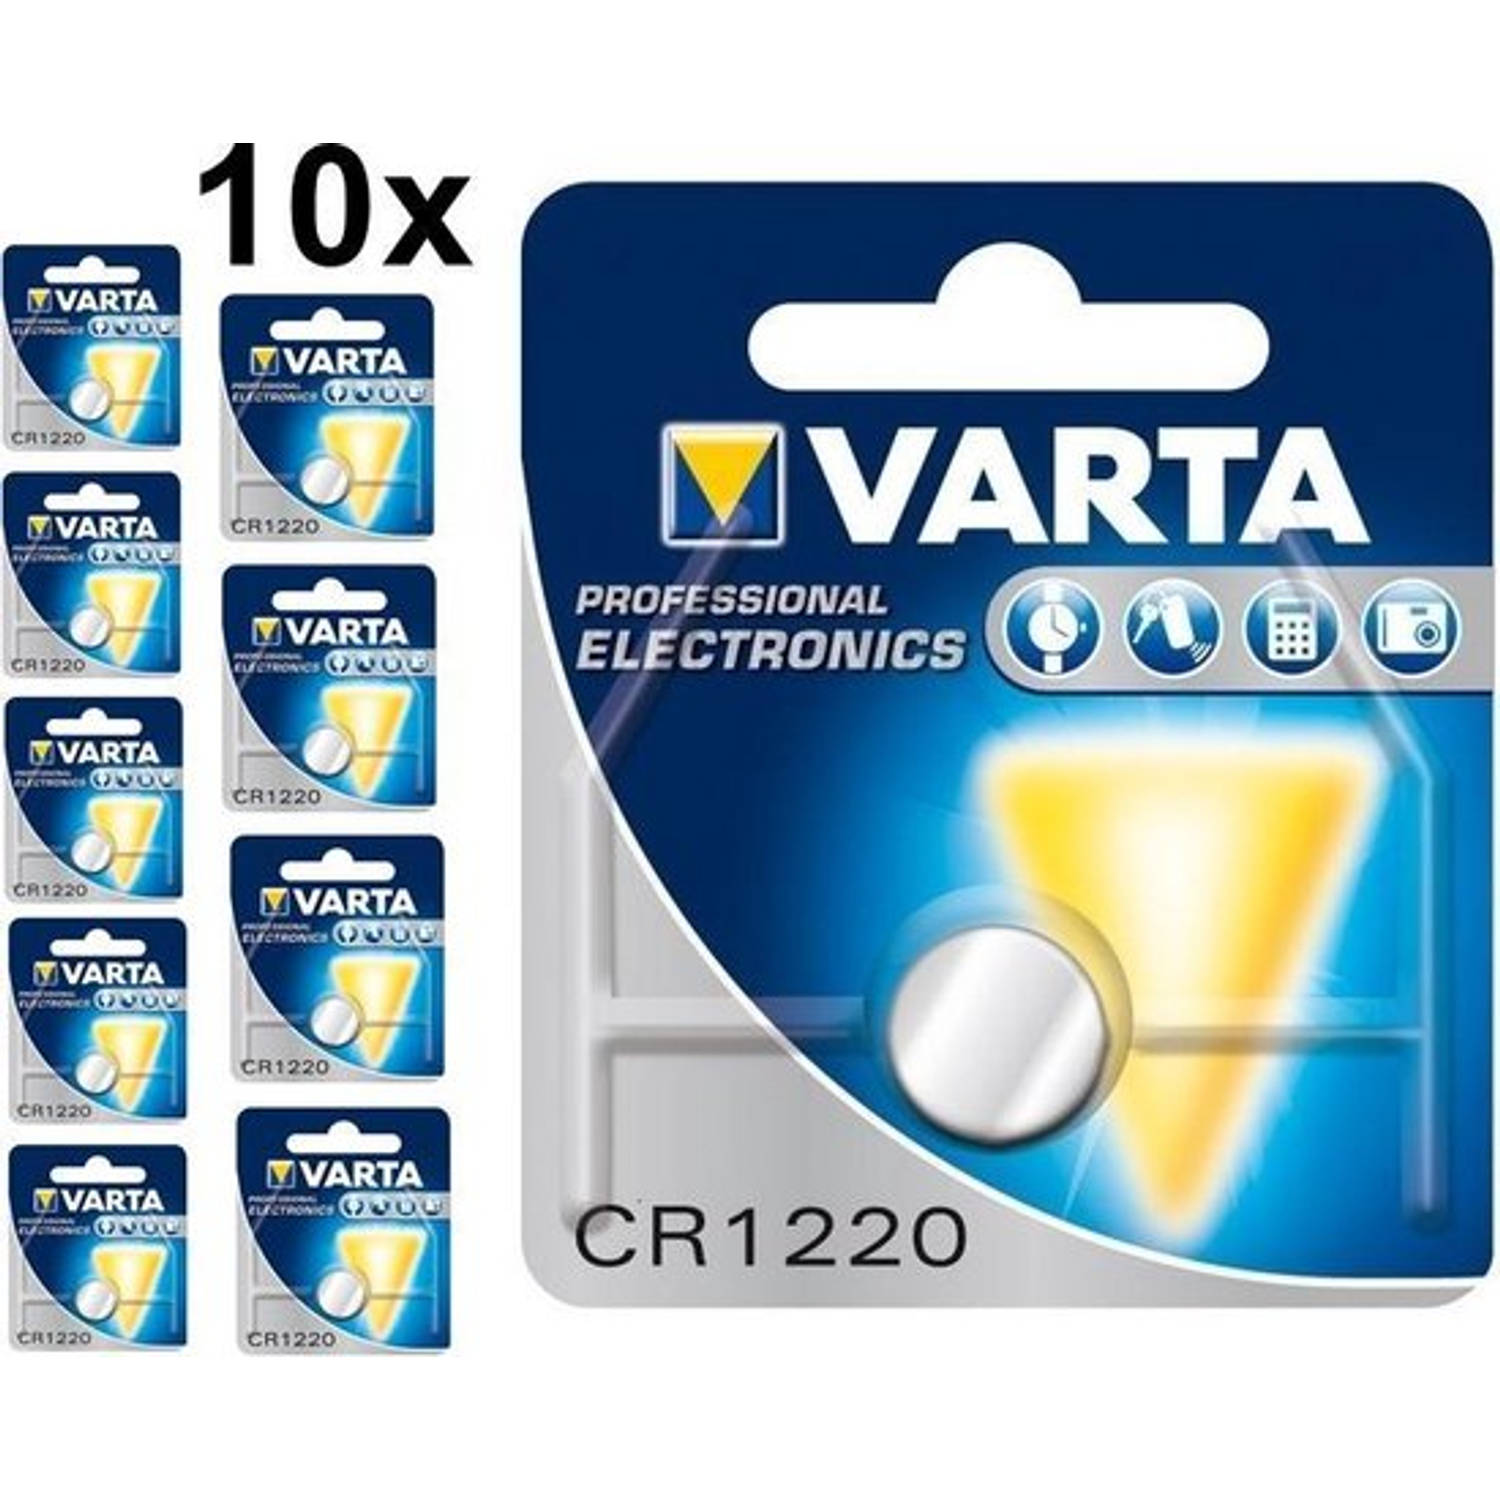 Varta Professional Electronics CR1220 6220 35mAh 3V knoopcelbatterij - 10 stuks